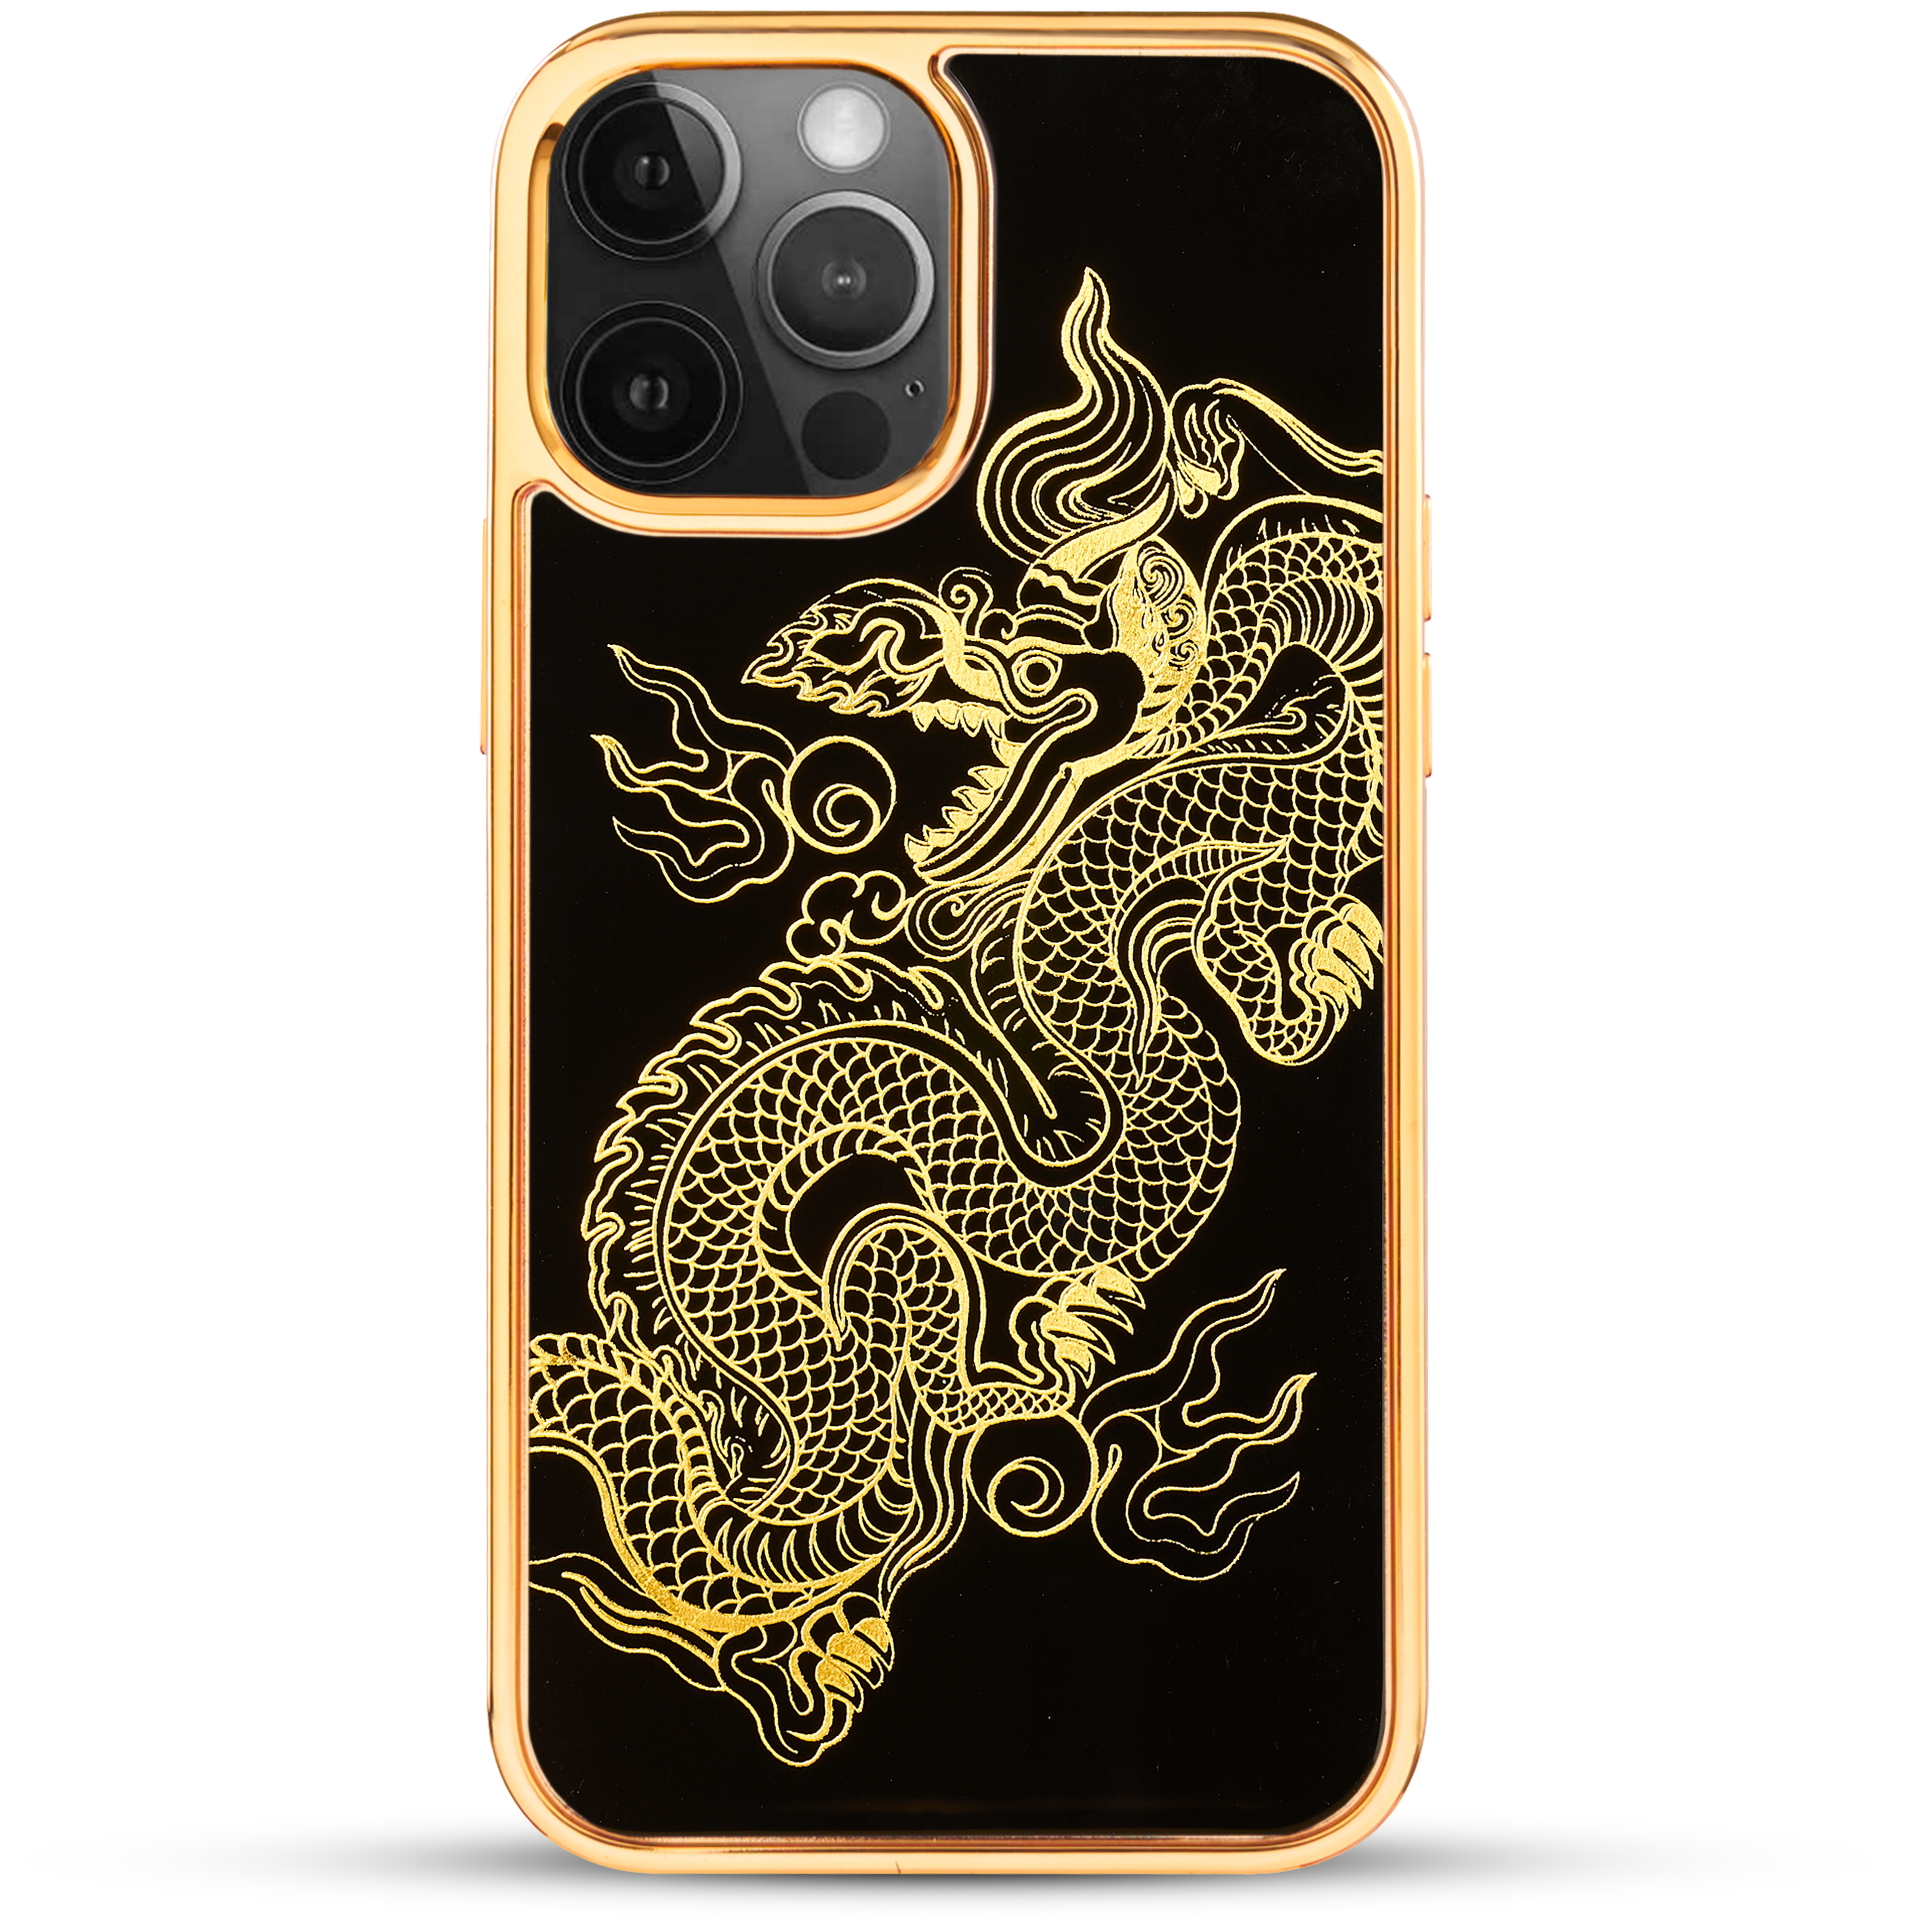 iPhone Case - Tran Dynastys Dragon